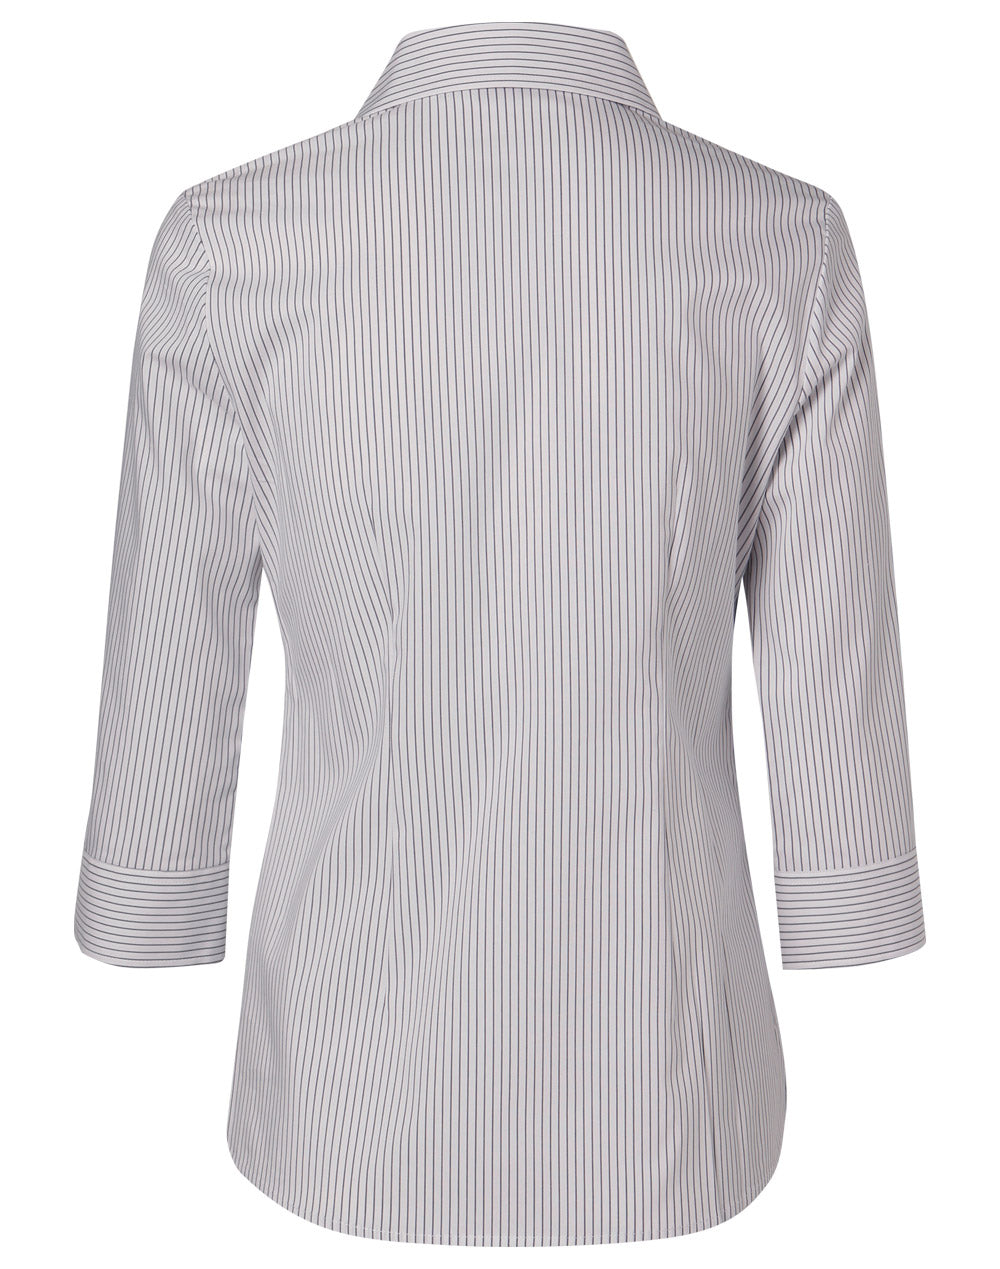 Winning Spirit-Women's Ticking Stripe 3/4 Sleeve Shirt-M8200Q